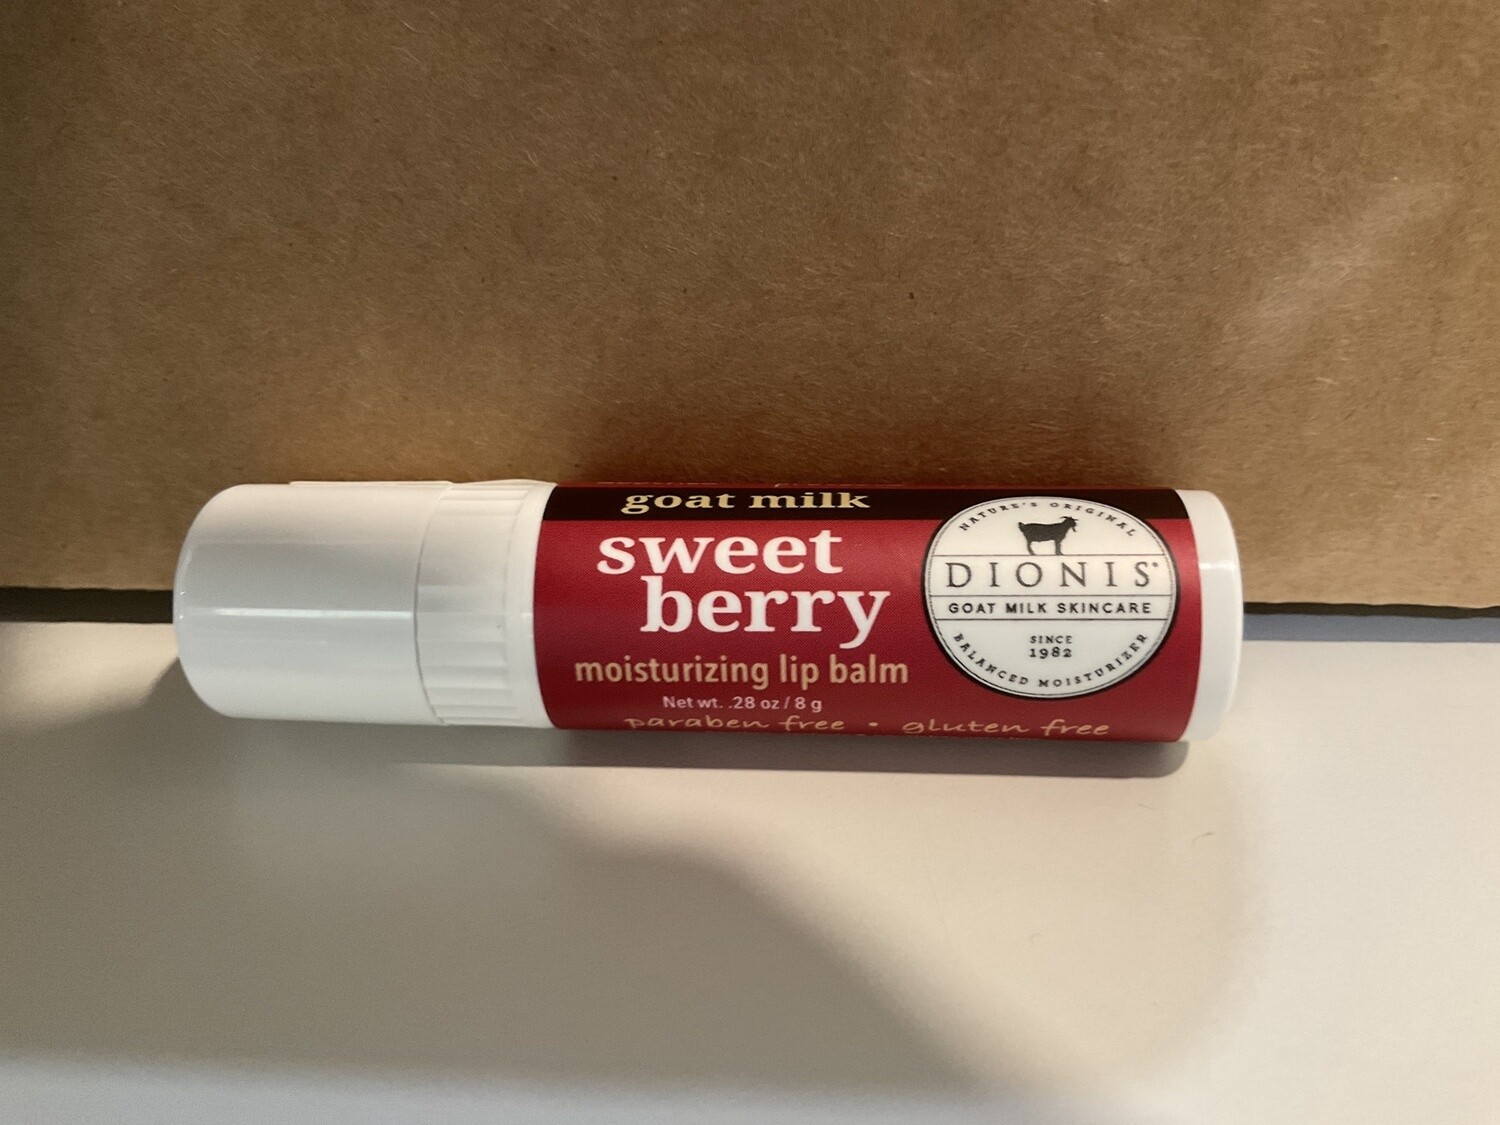 Sweet berry lip balm